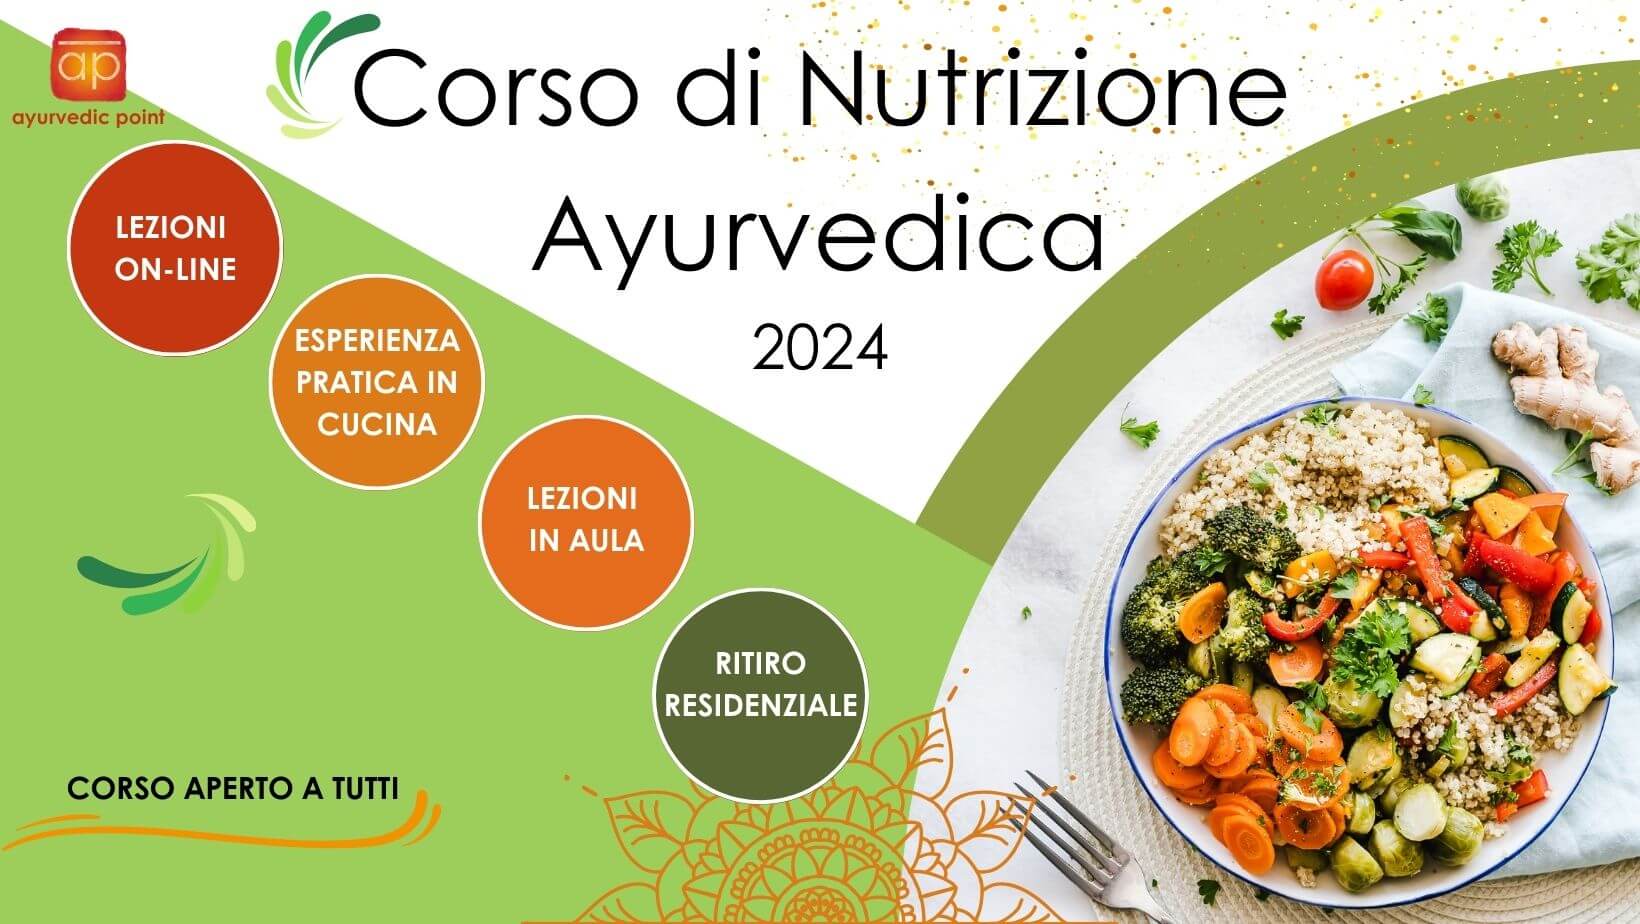 Corso di Nutrizione Ayurvedica - Febbraio 2024 | Ayurvedic Point©